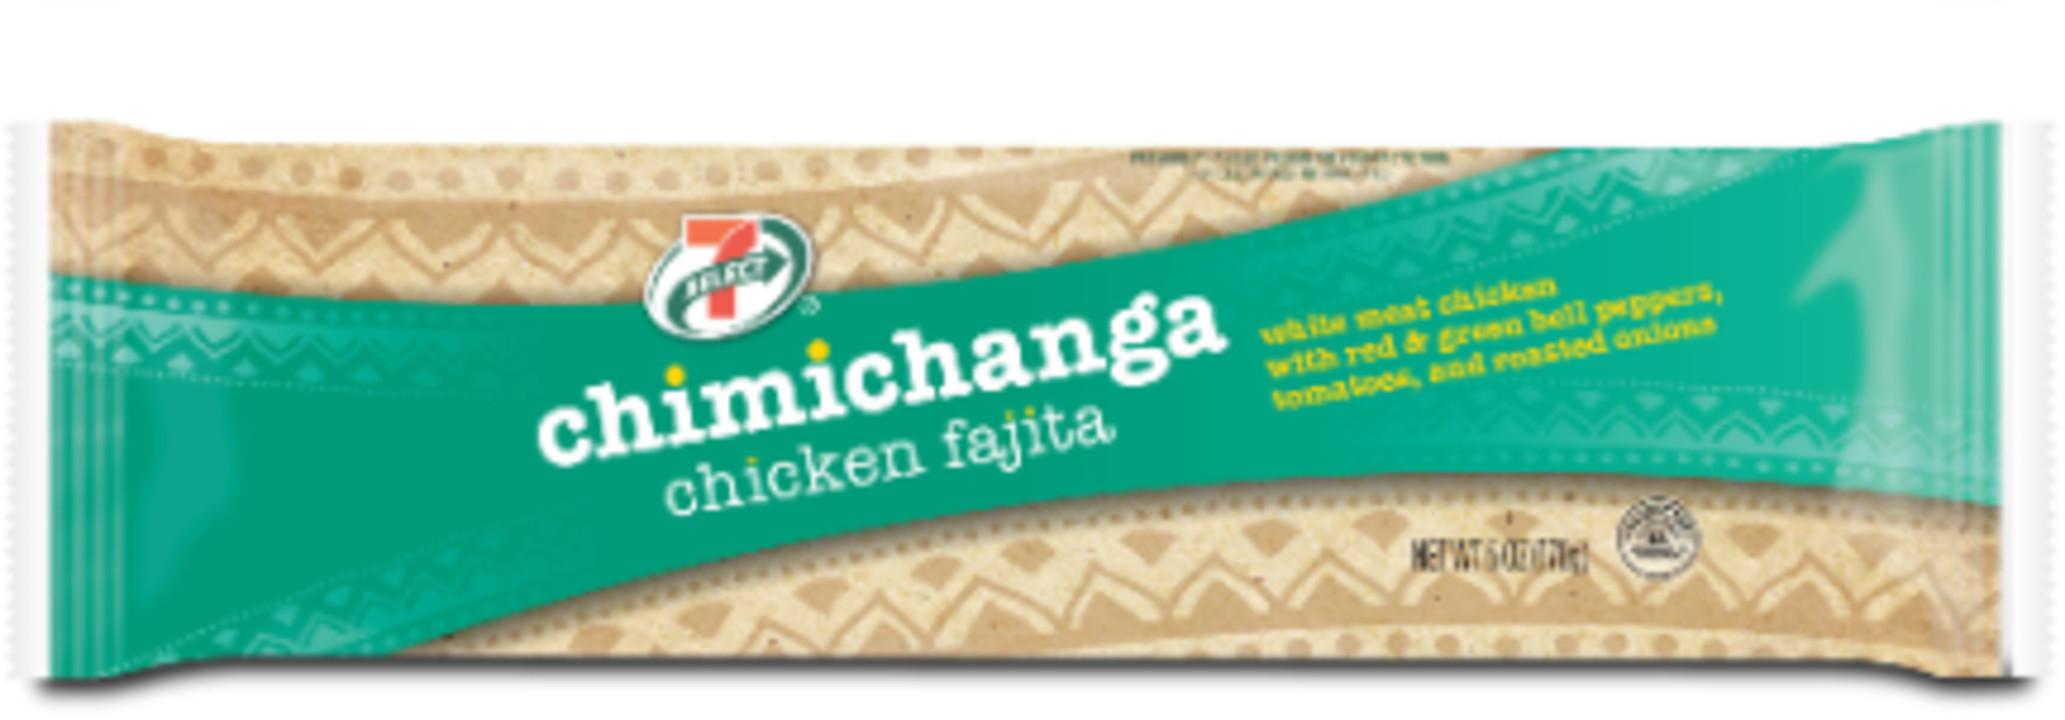 7-Select Chimichanga Chicken Fajita